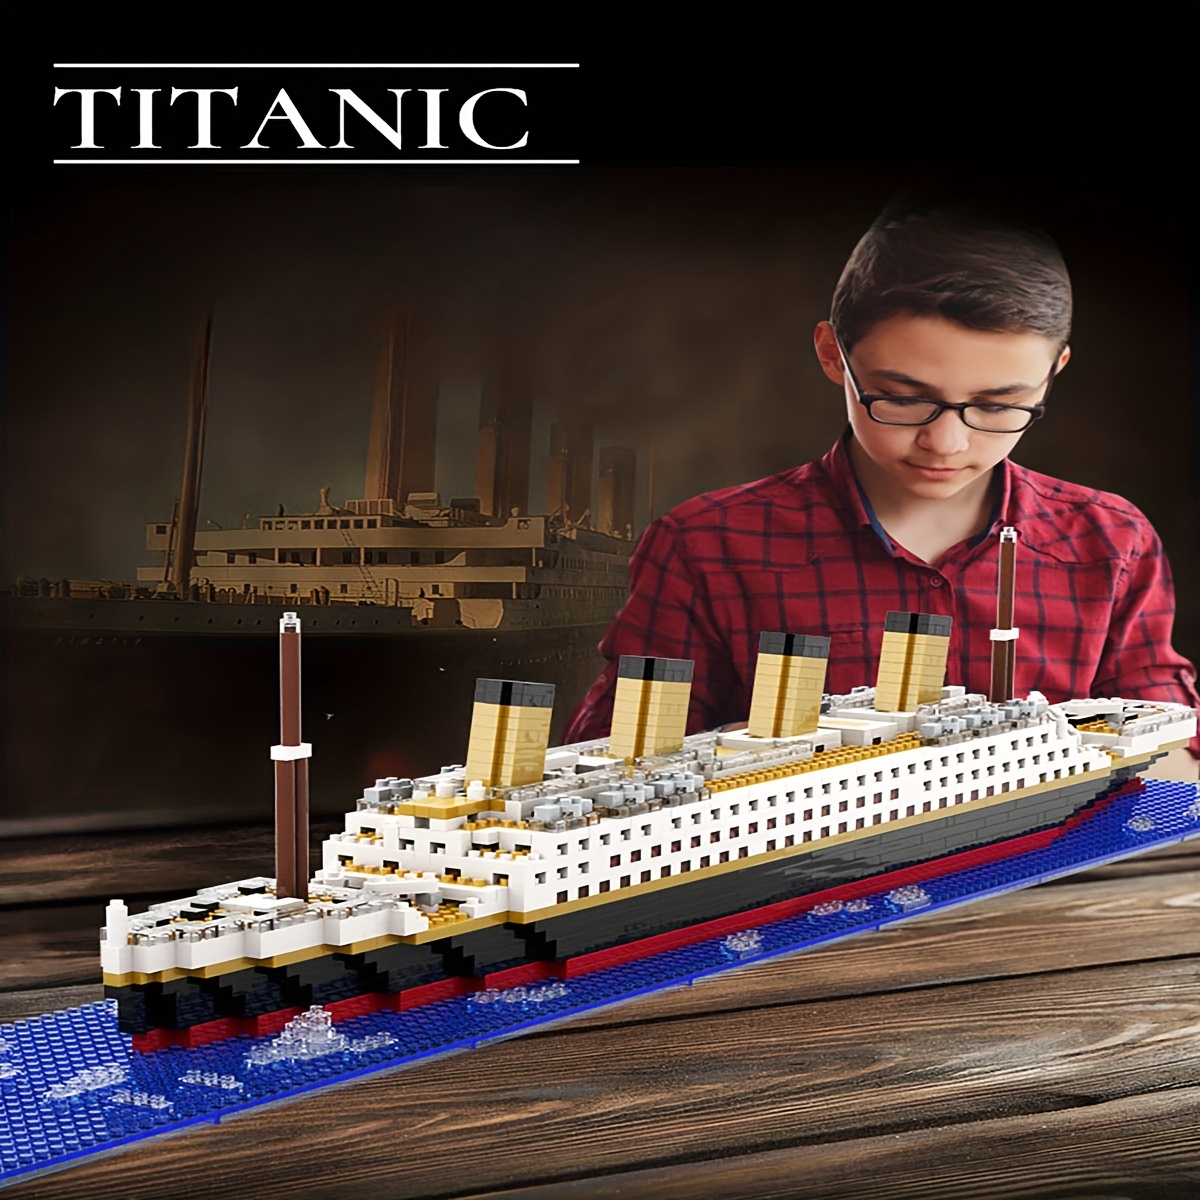 titanic sinking model